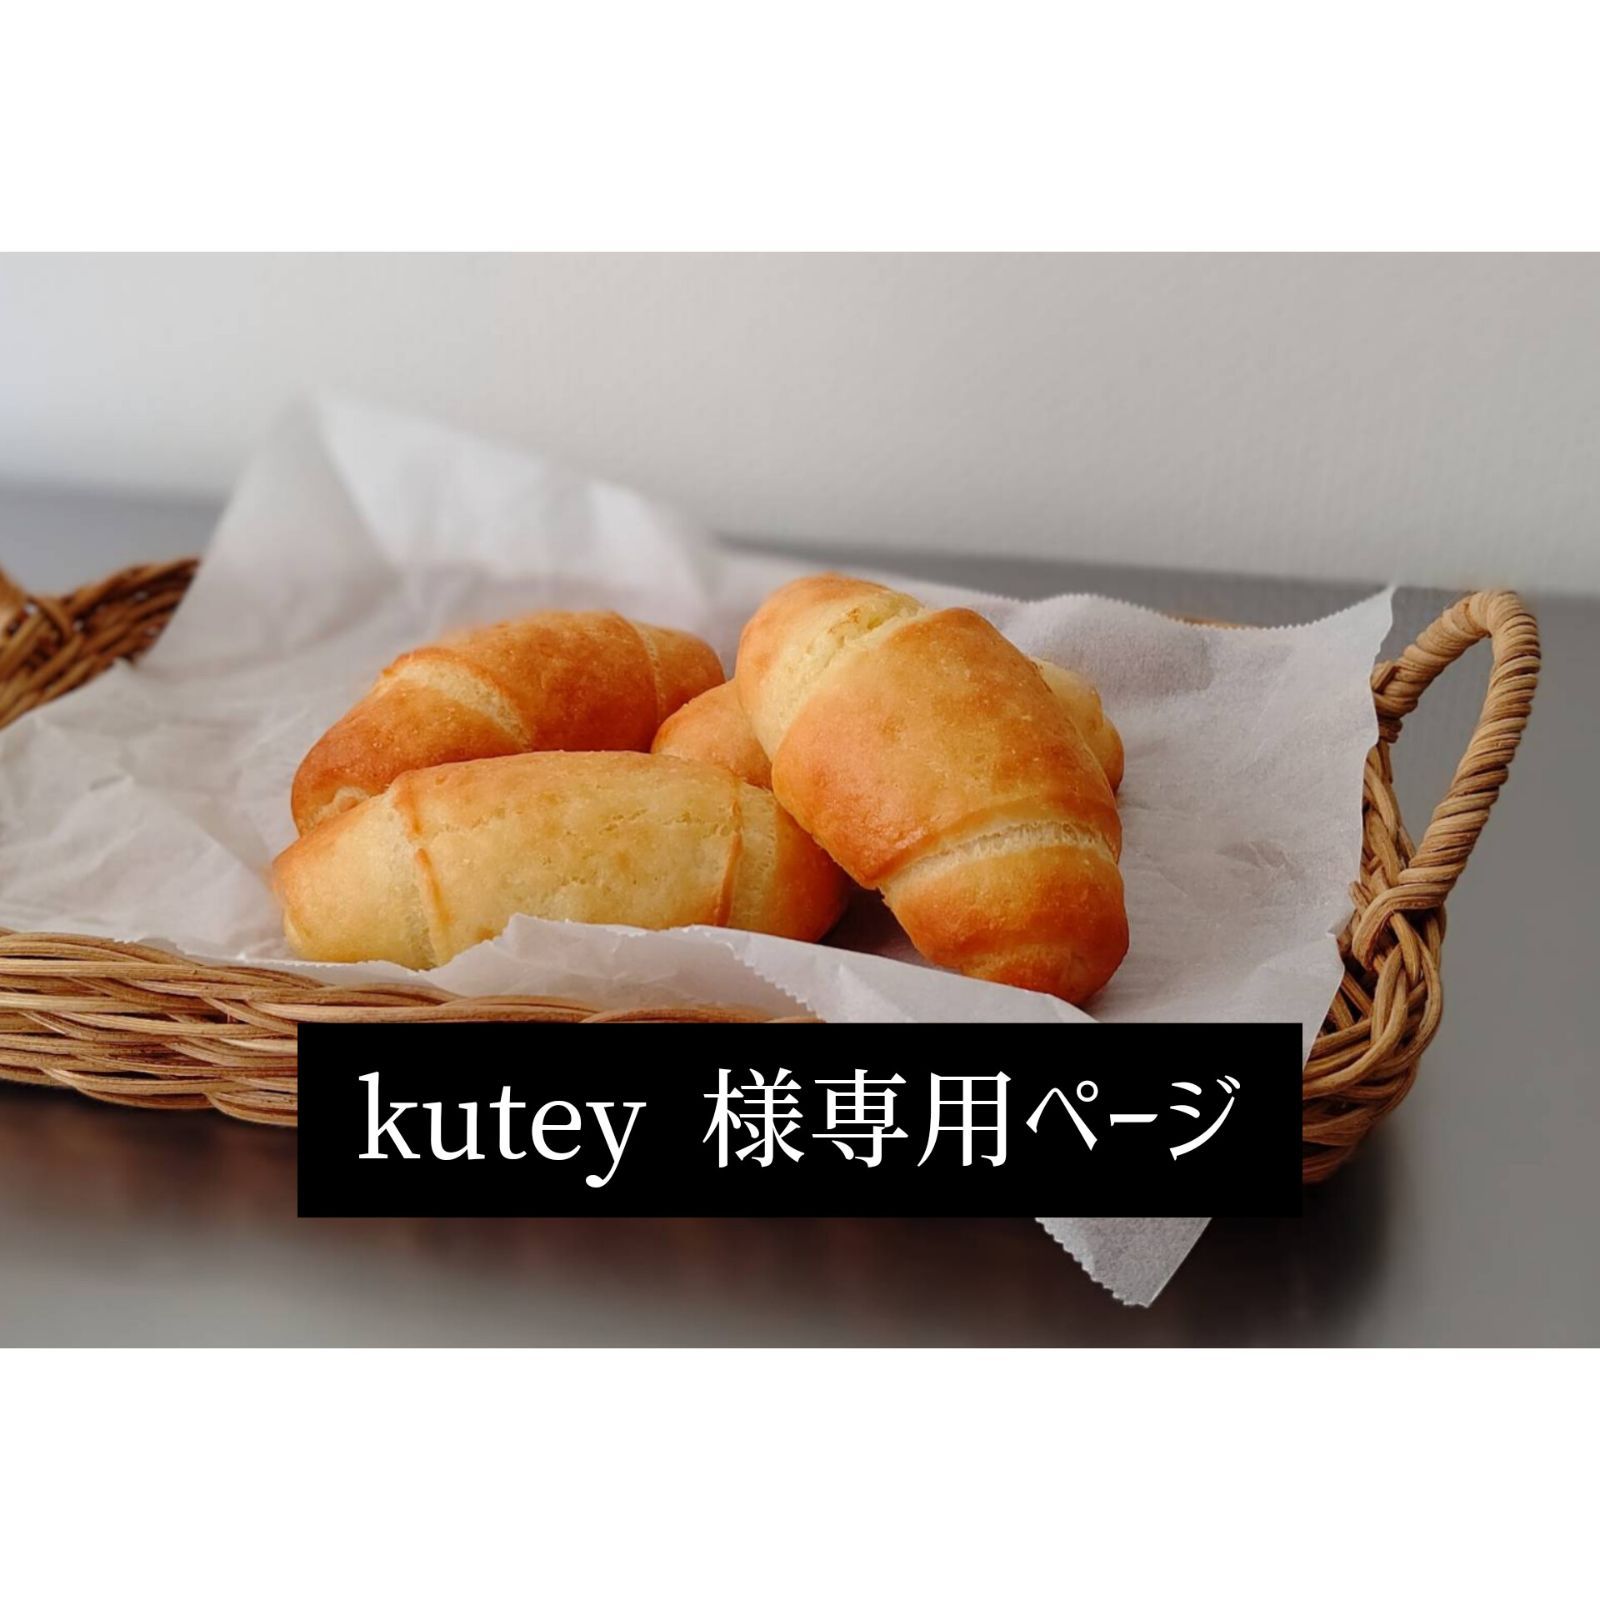 kutey 様専用出品ページ グルテンフリーパン 米粉食パン - メルカリ